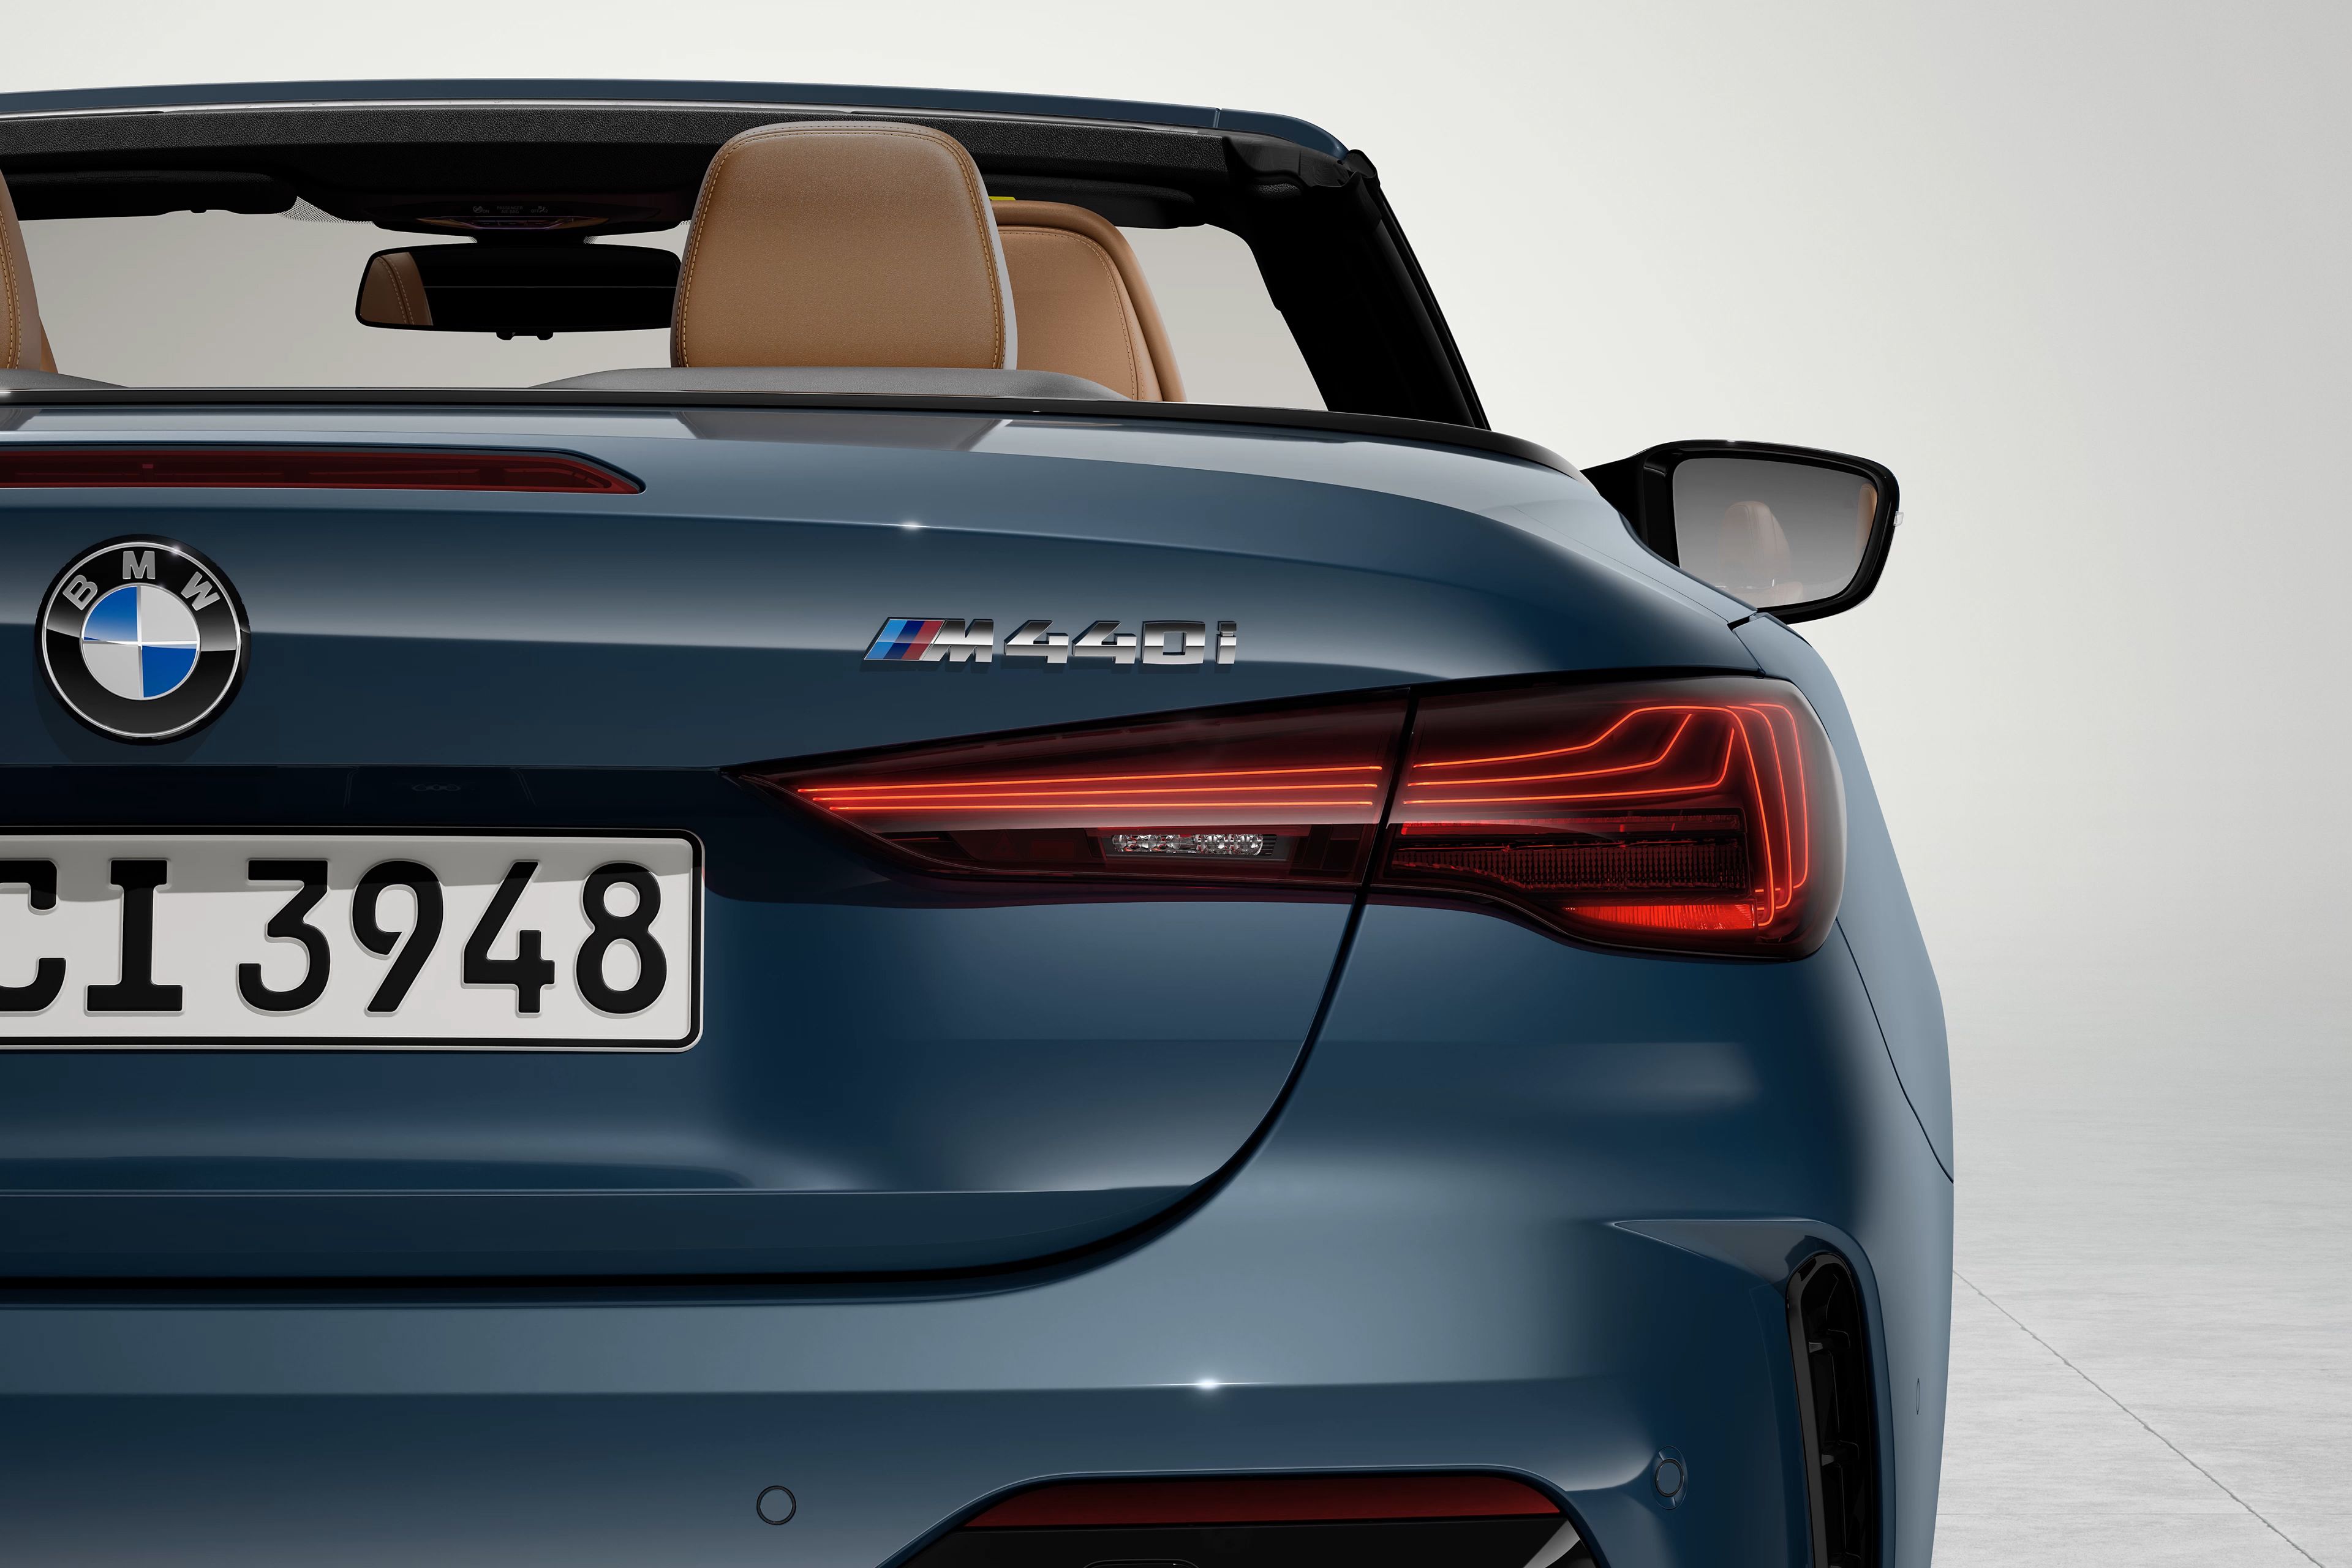 New design of rear lights on the BMW M440i